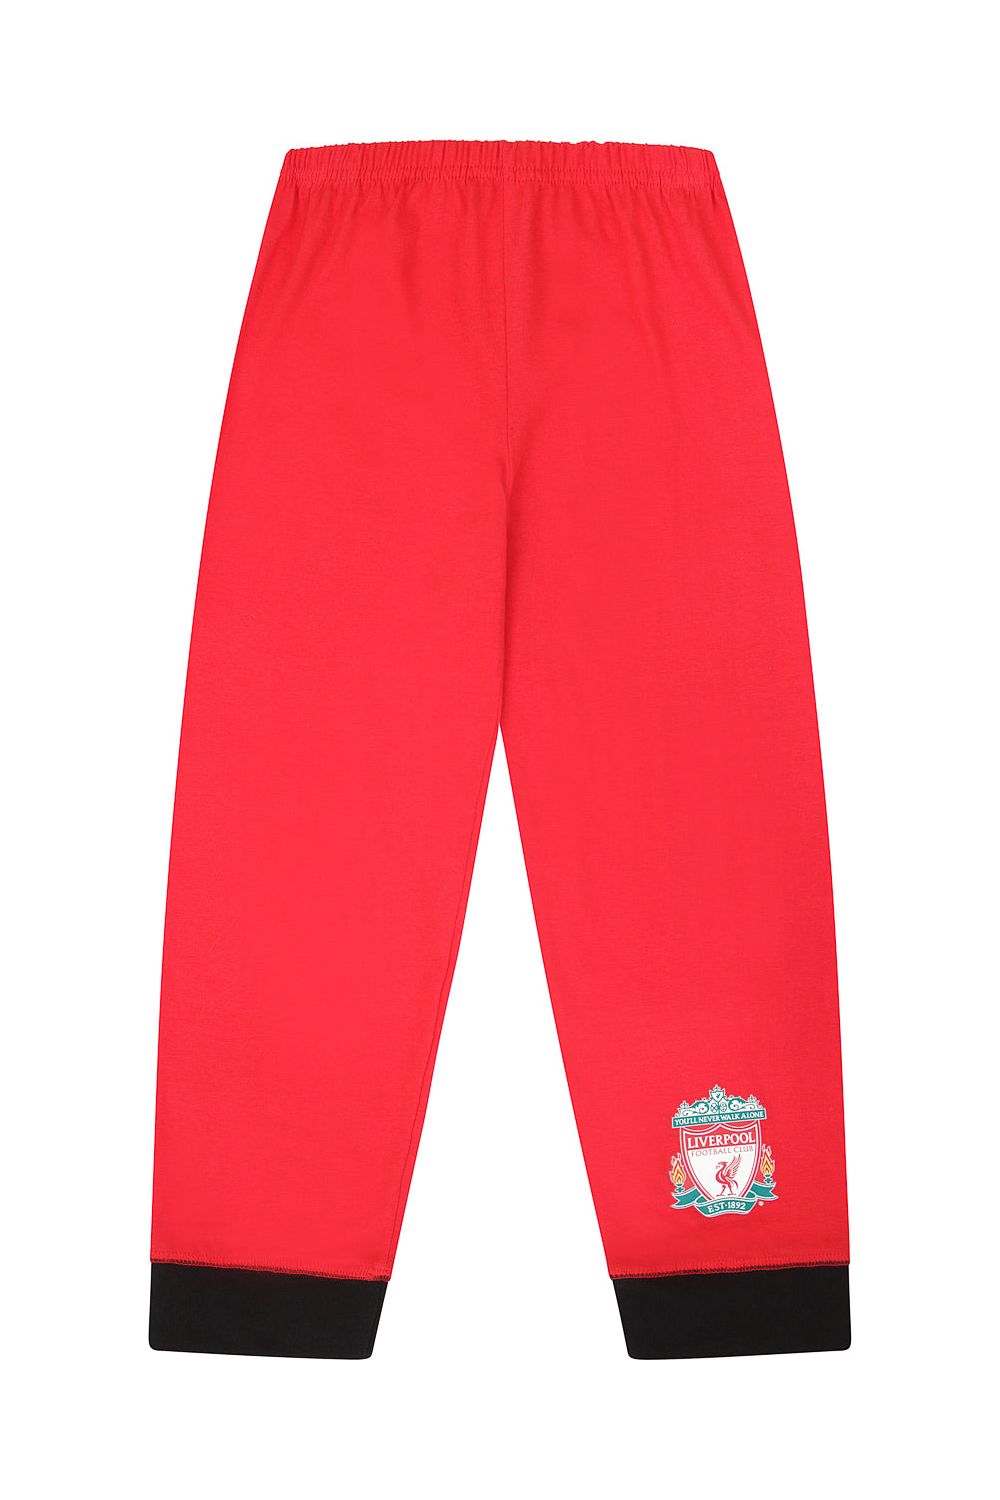 Official Liverpool FC LFC Red Pyjamas - Pyjamas.com